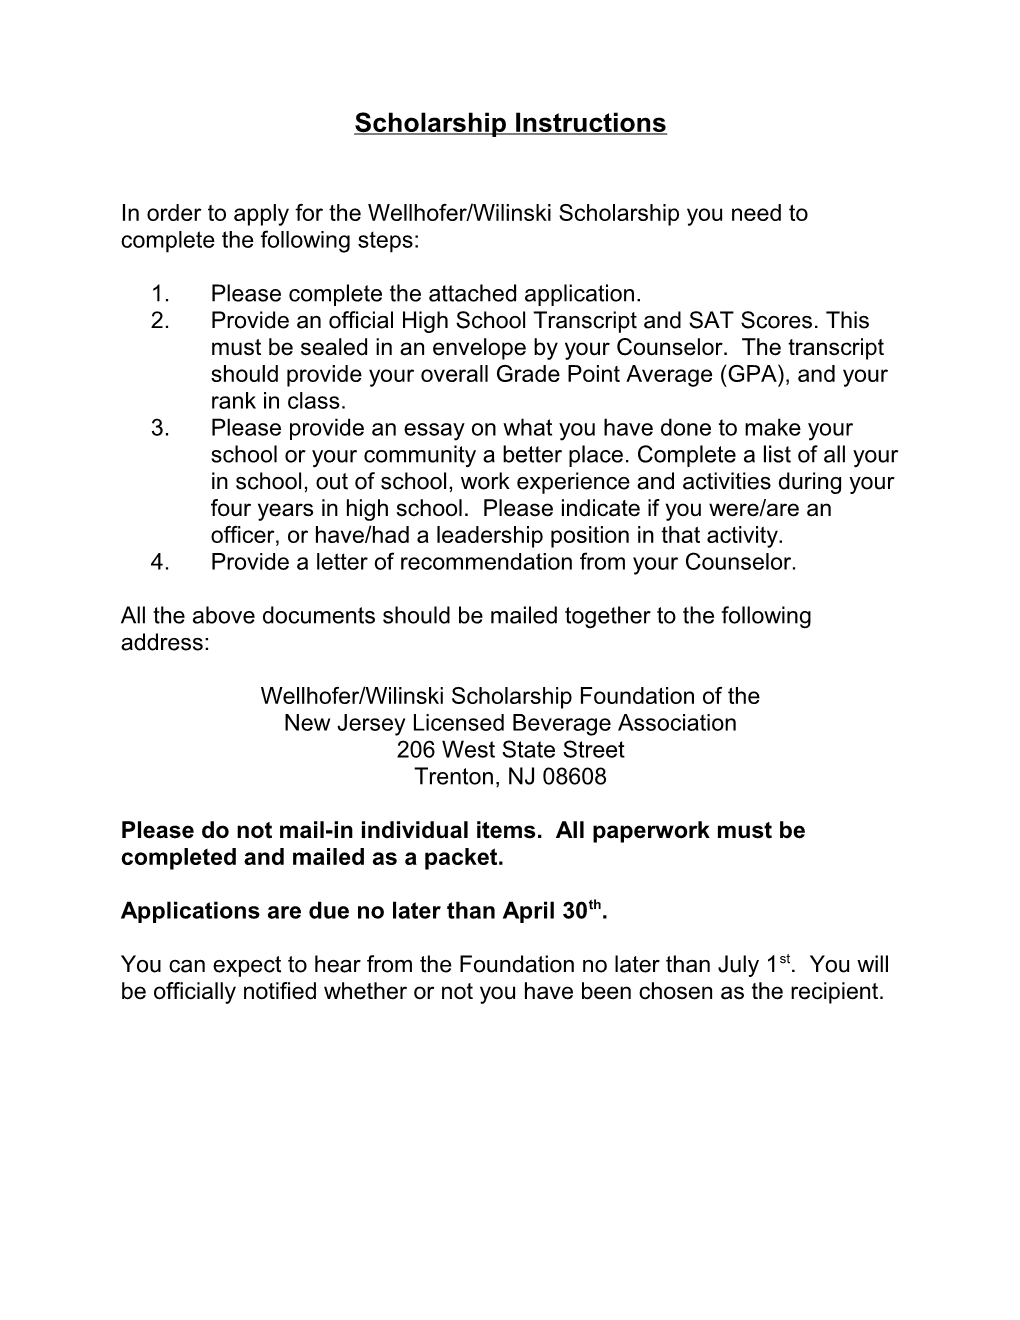 Wellhofer/Wilinski Scholarship Foundation of The